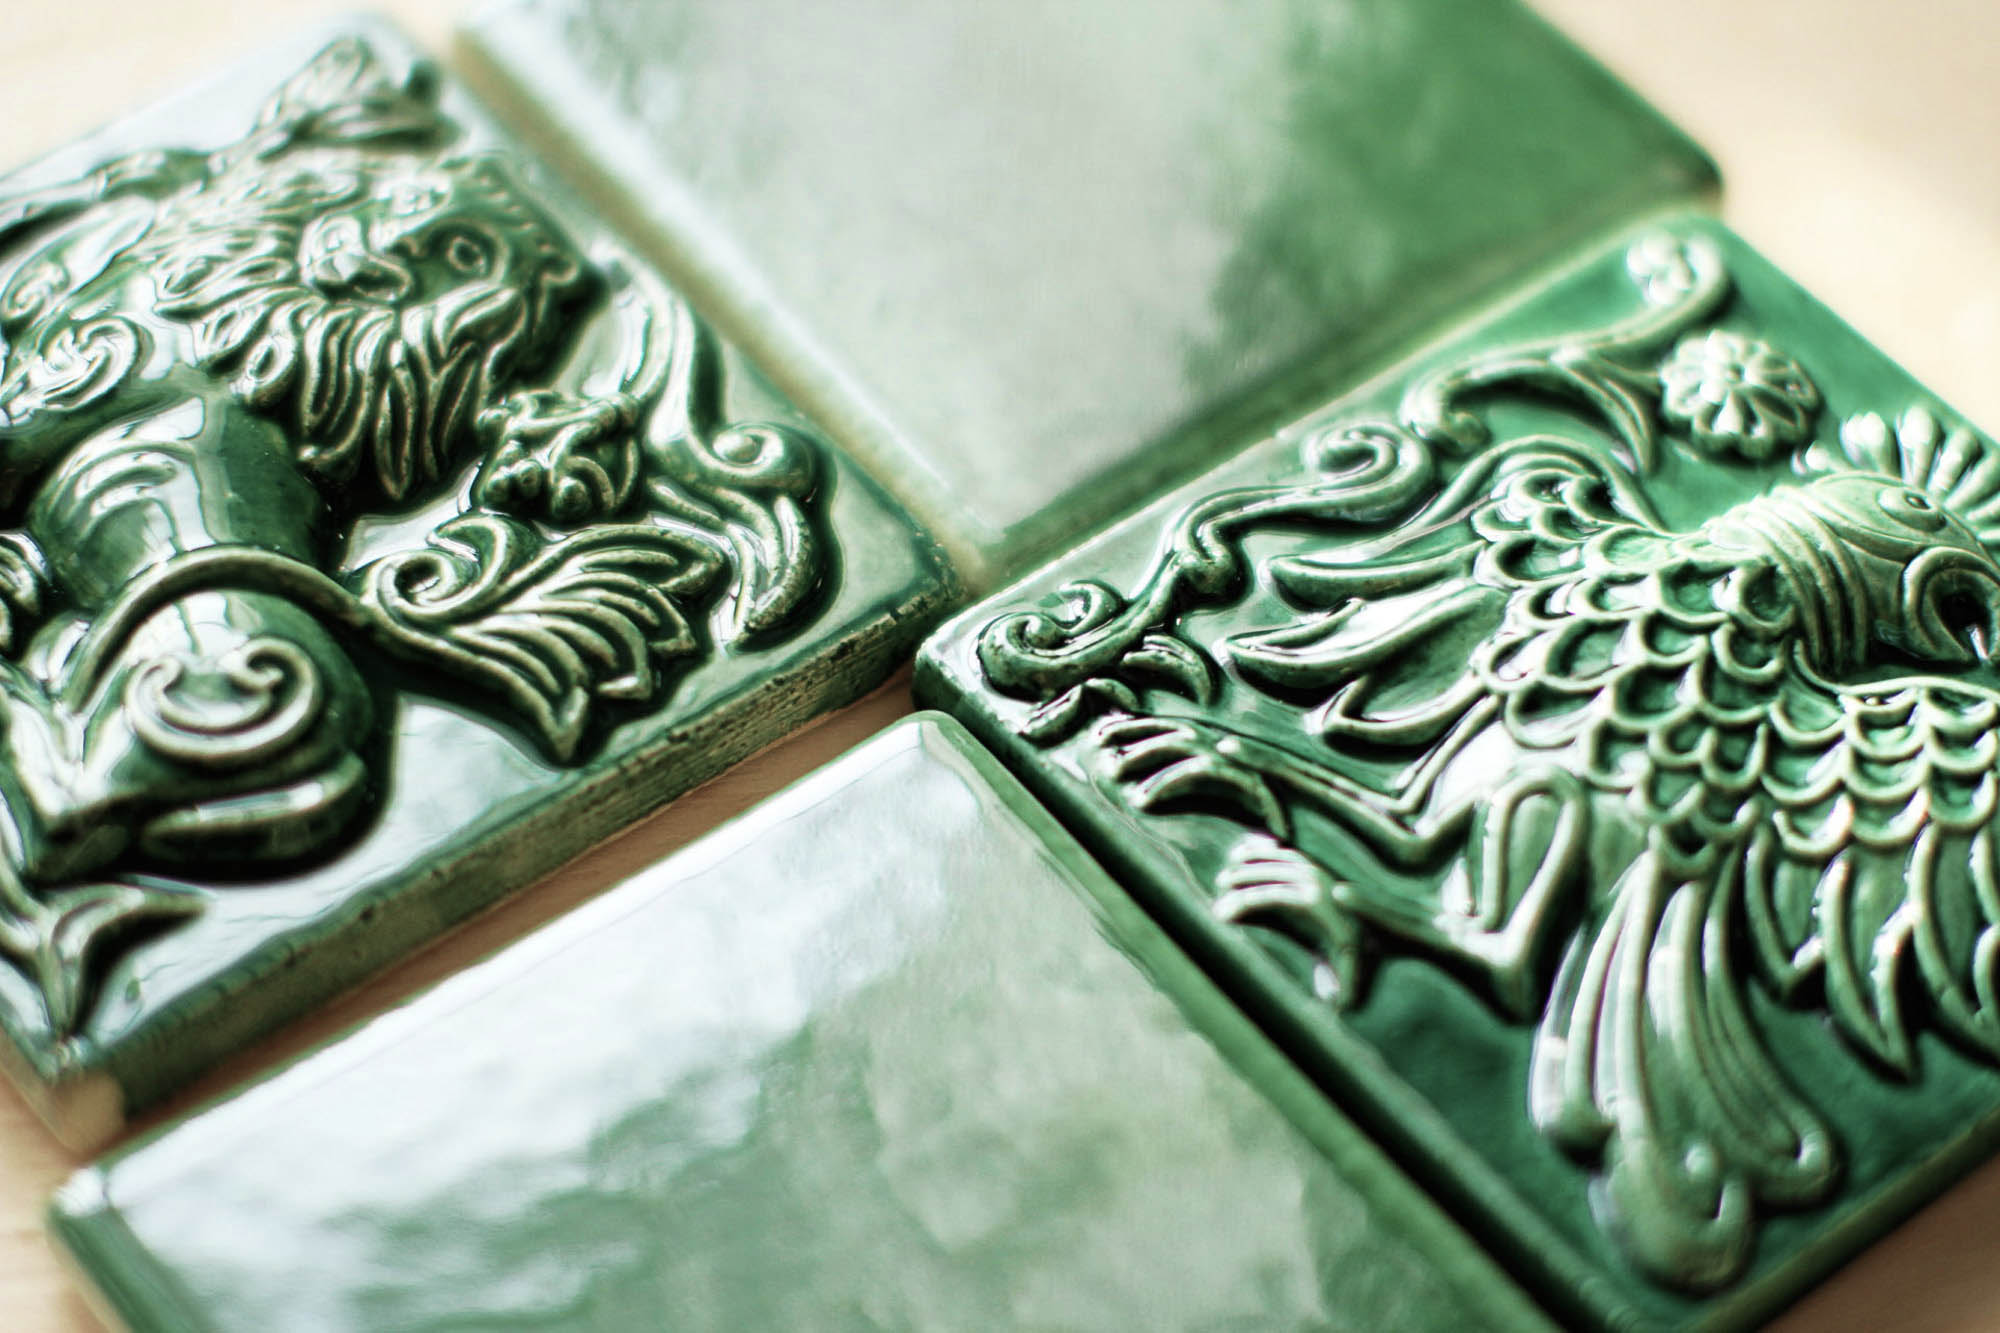 Classic decorated ceramic craftmanship on green tiles